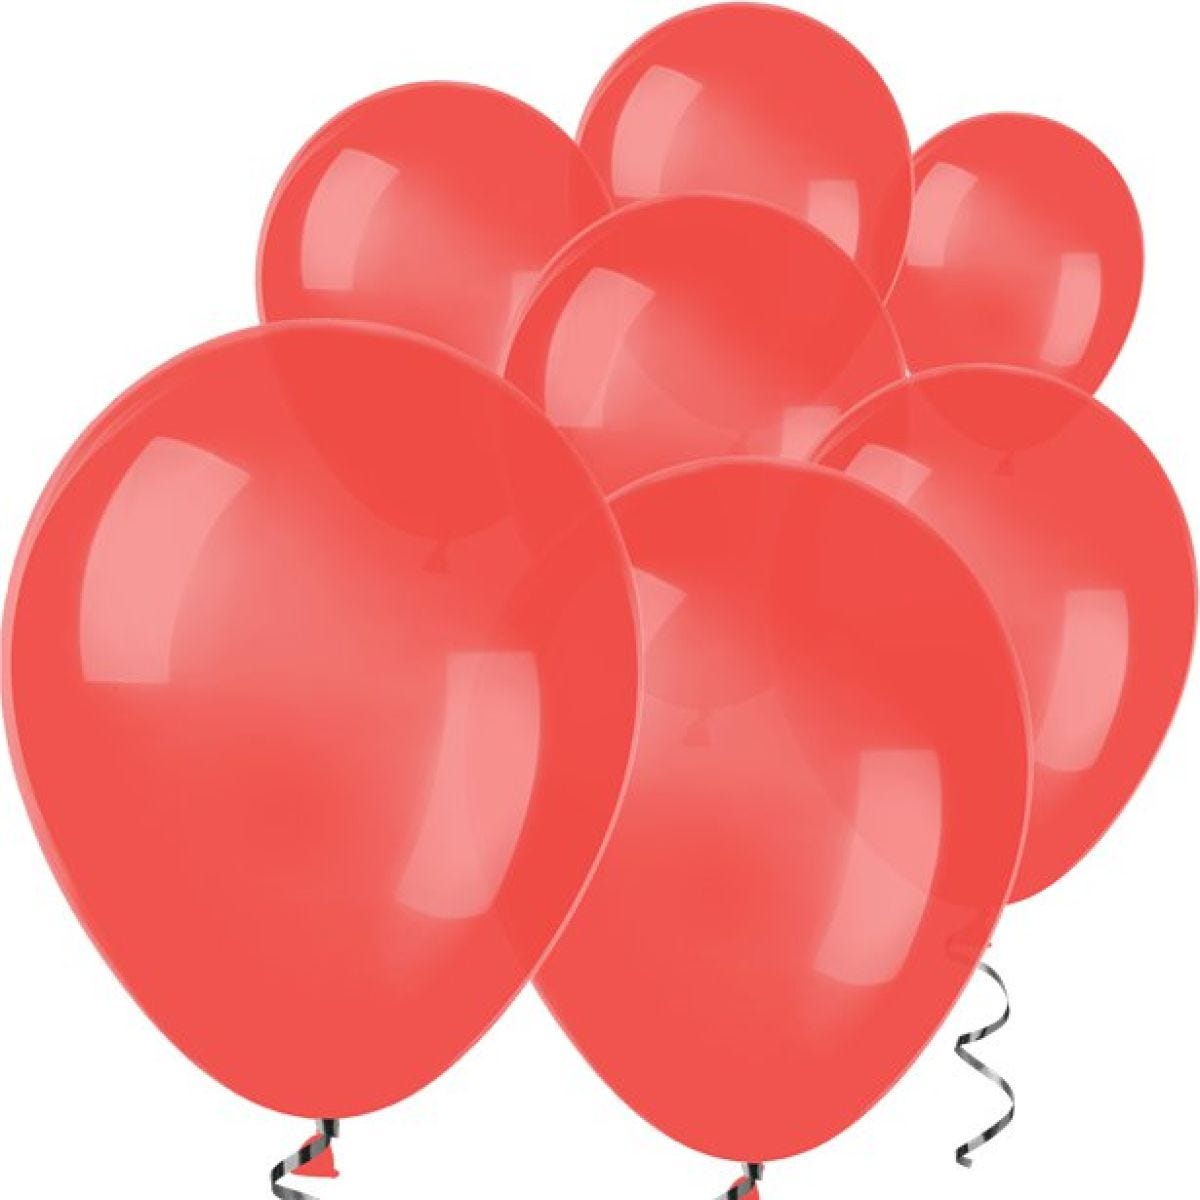 Red Mini Balloons - 5" Latex Balloons